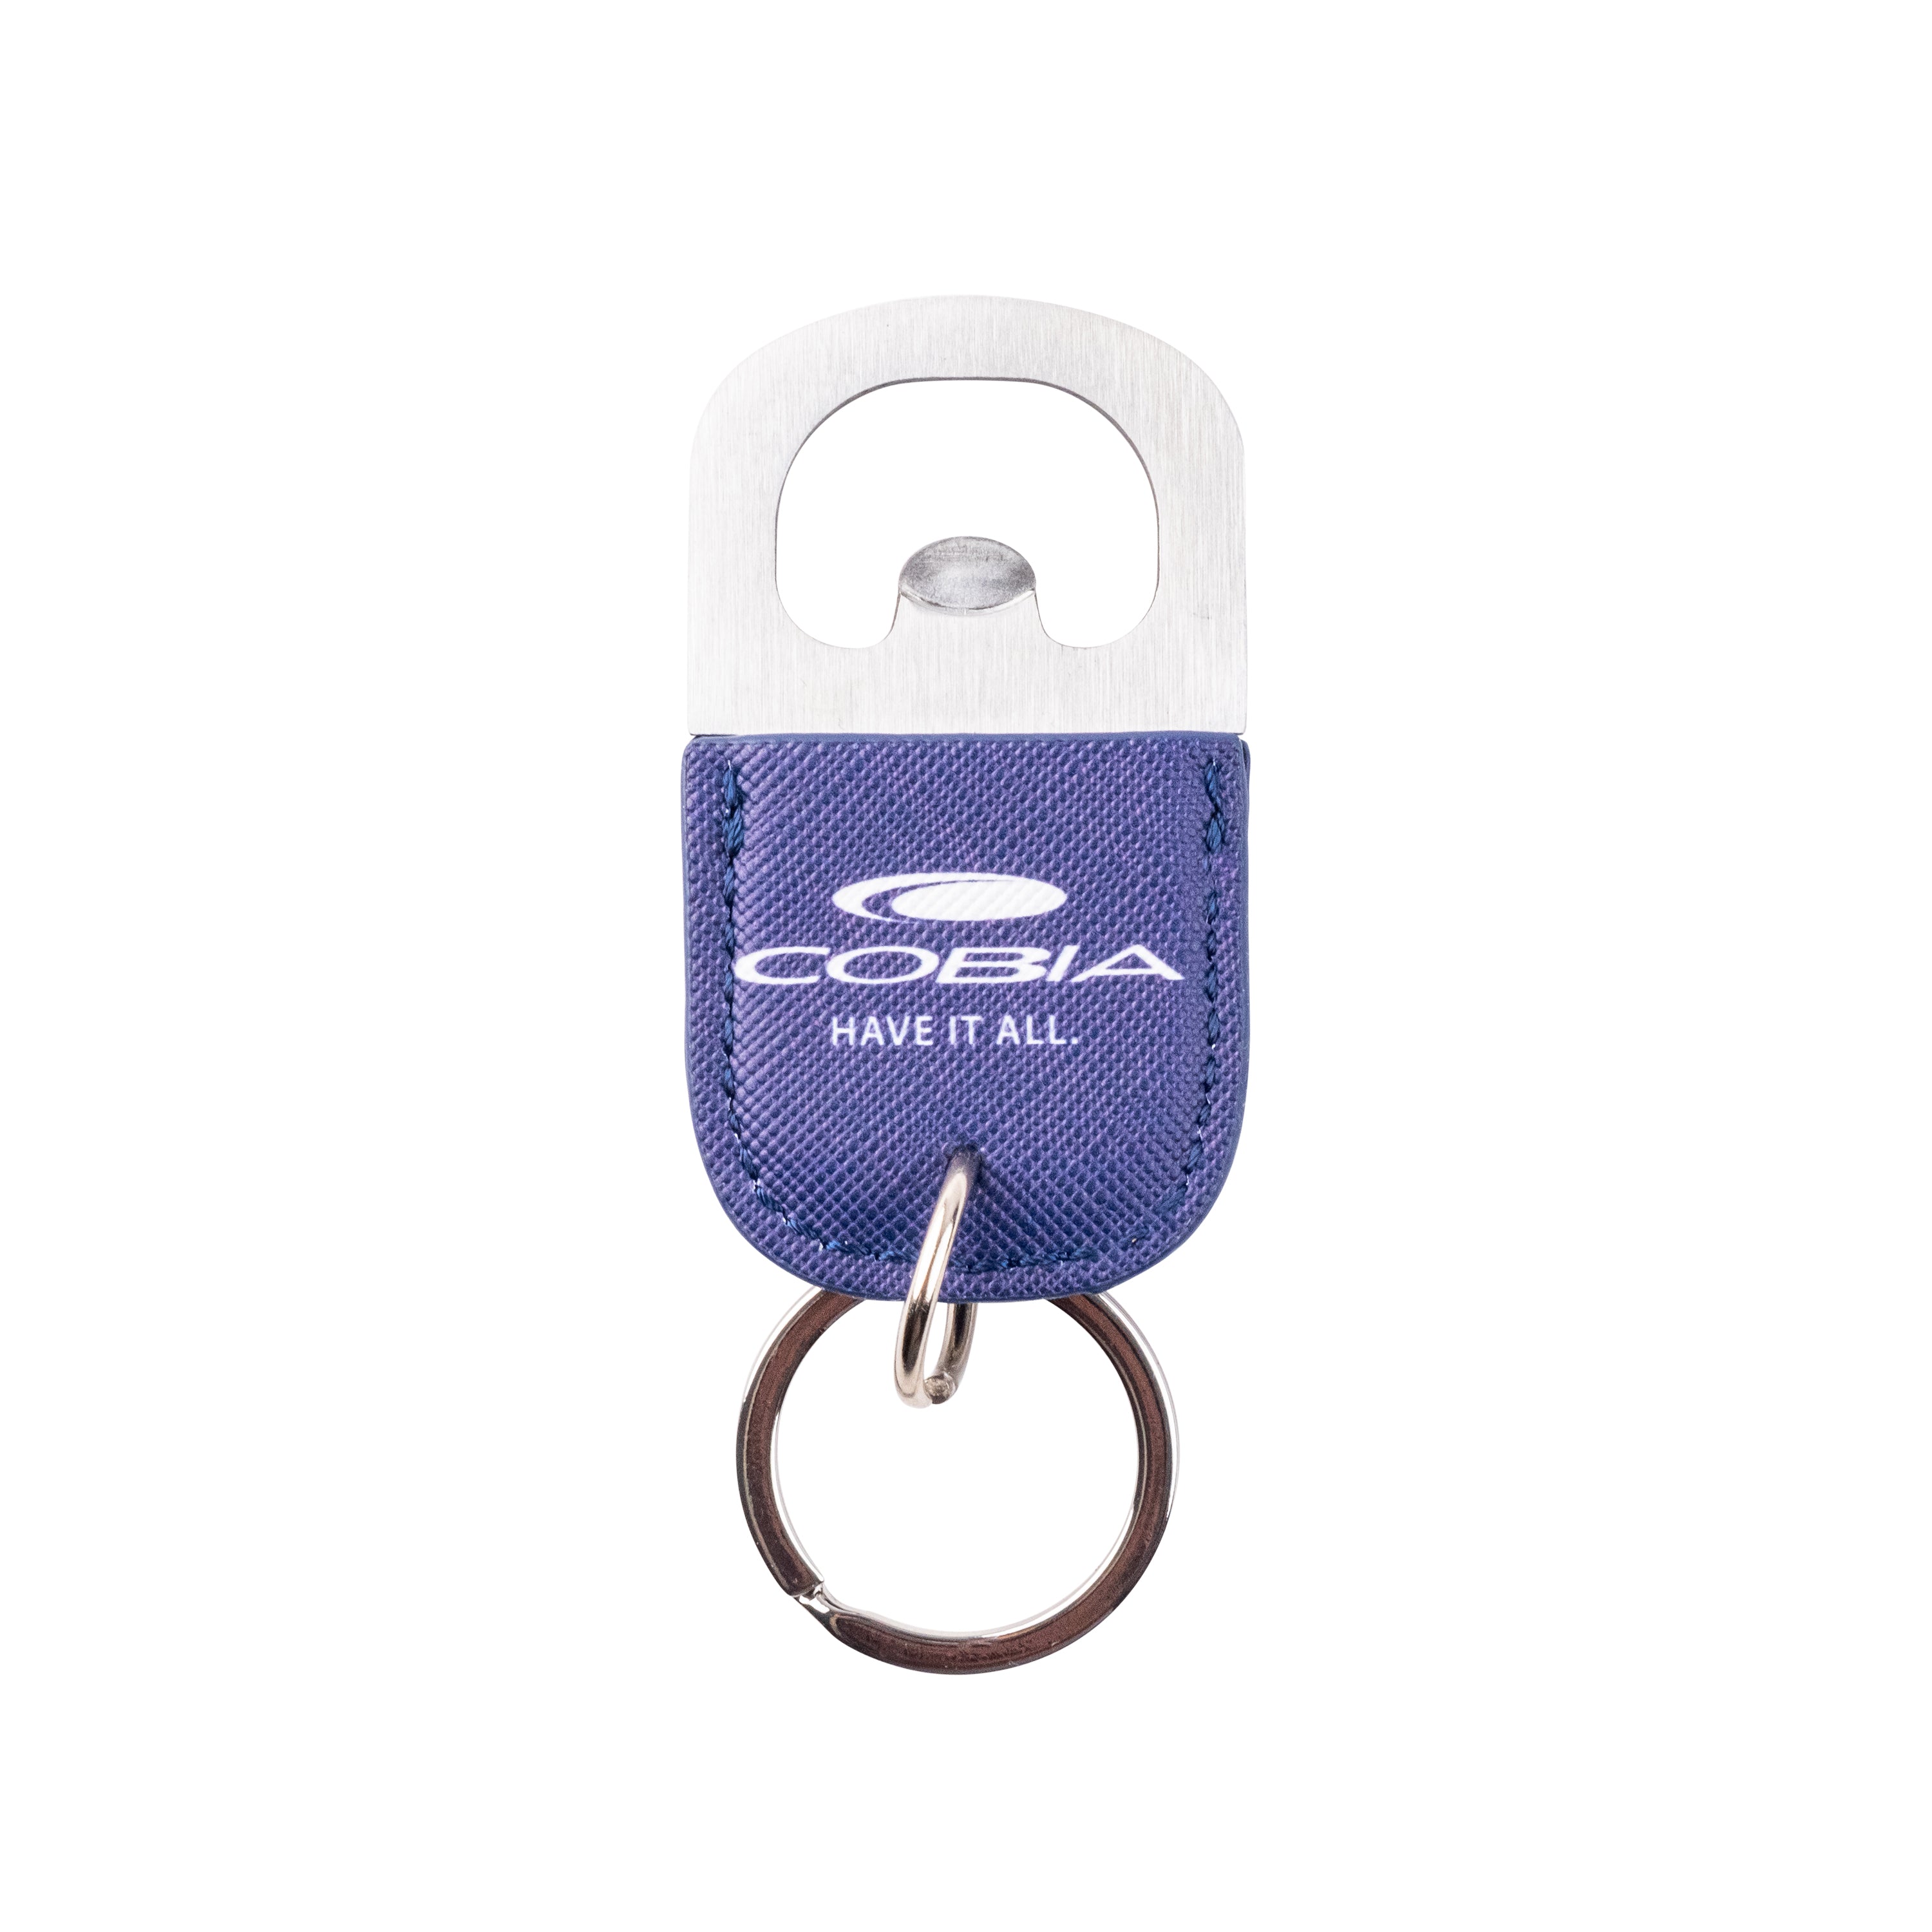 Cobia bottle opener keychain